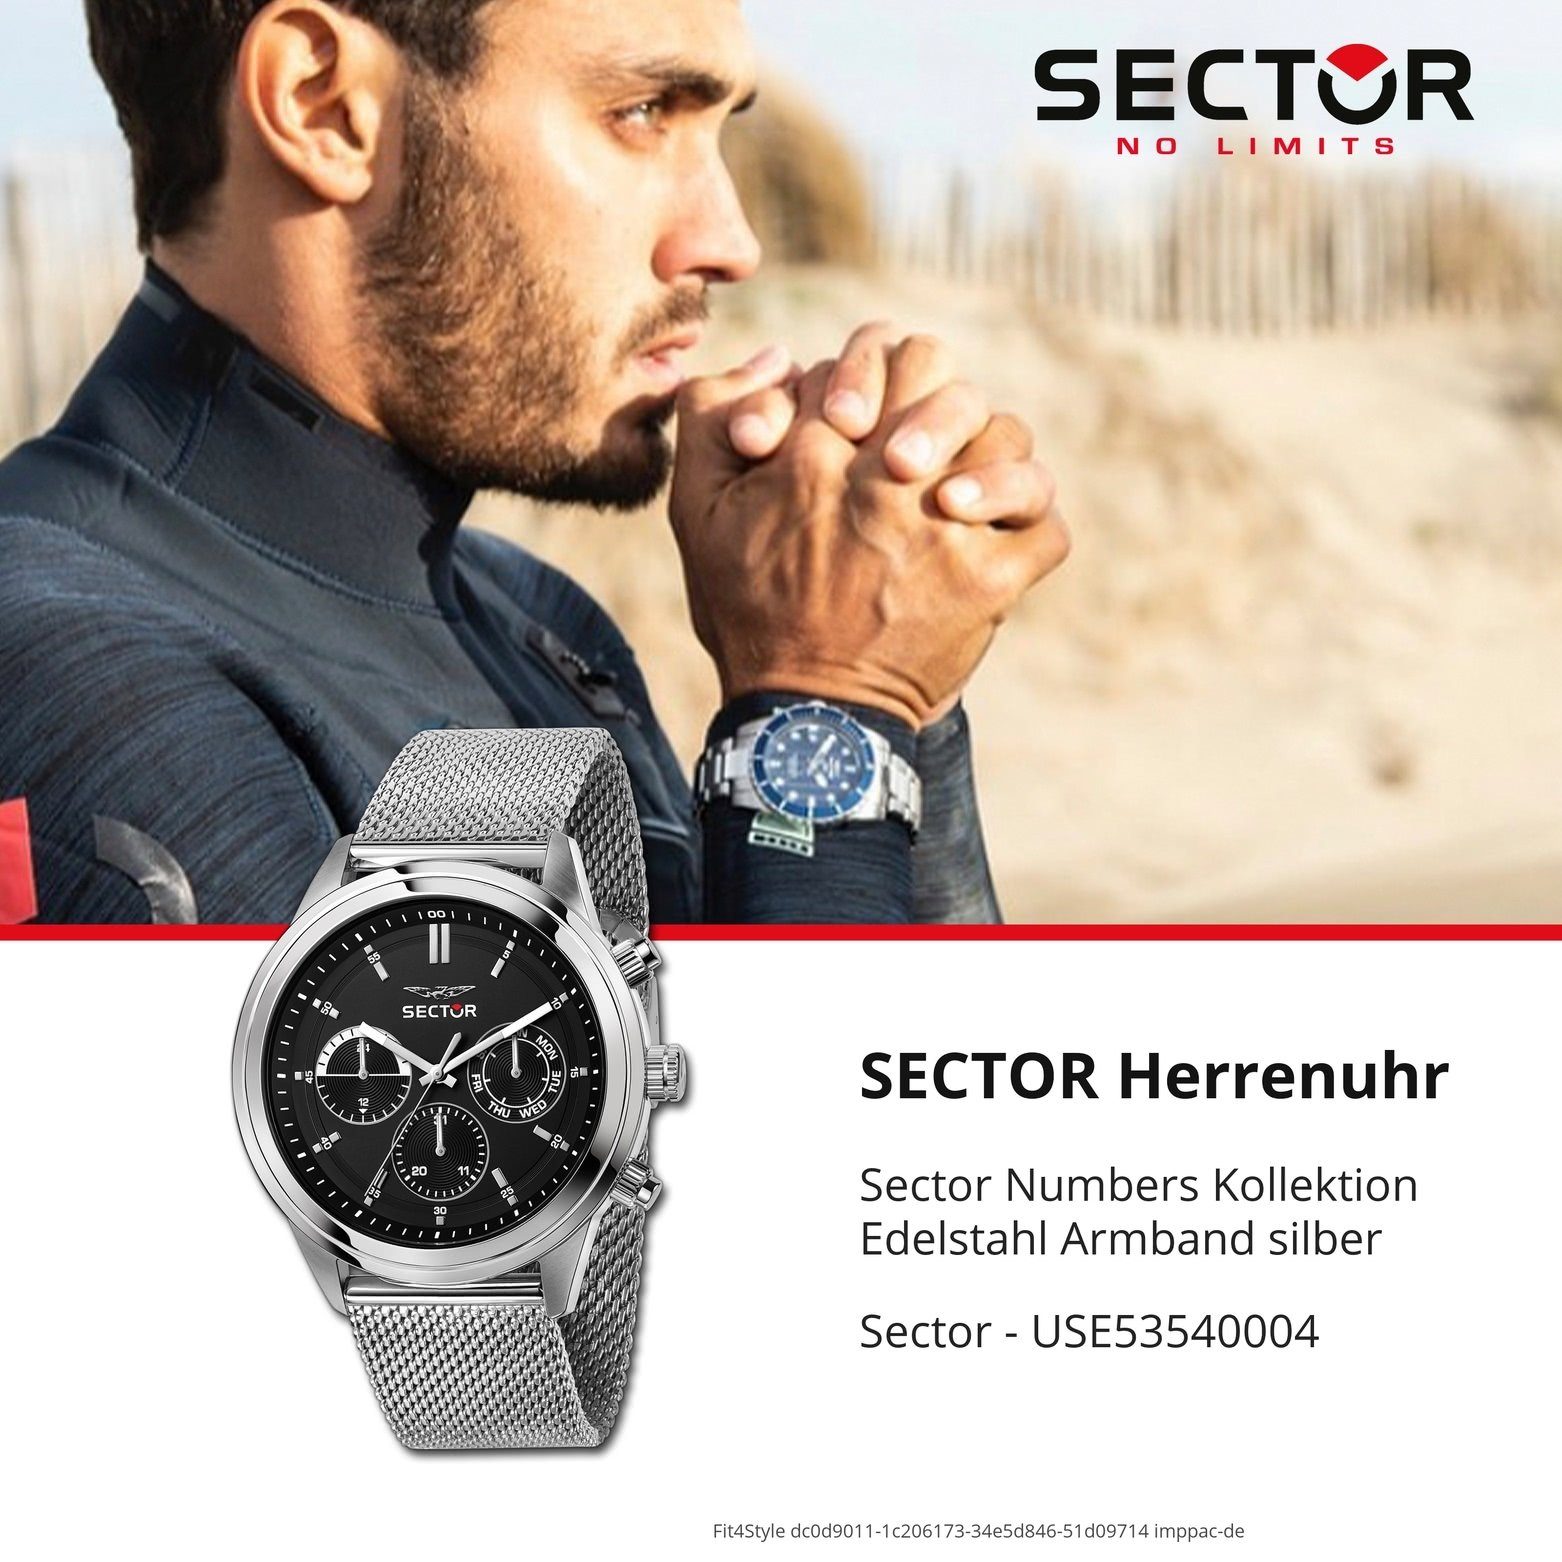 silber, Herren Herren (43mm), groß Armbanduhr Fashion Multifunkt, Armbanduhr Edelstahlarmband Sector Sector Multifunktionsuhr rund,